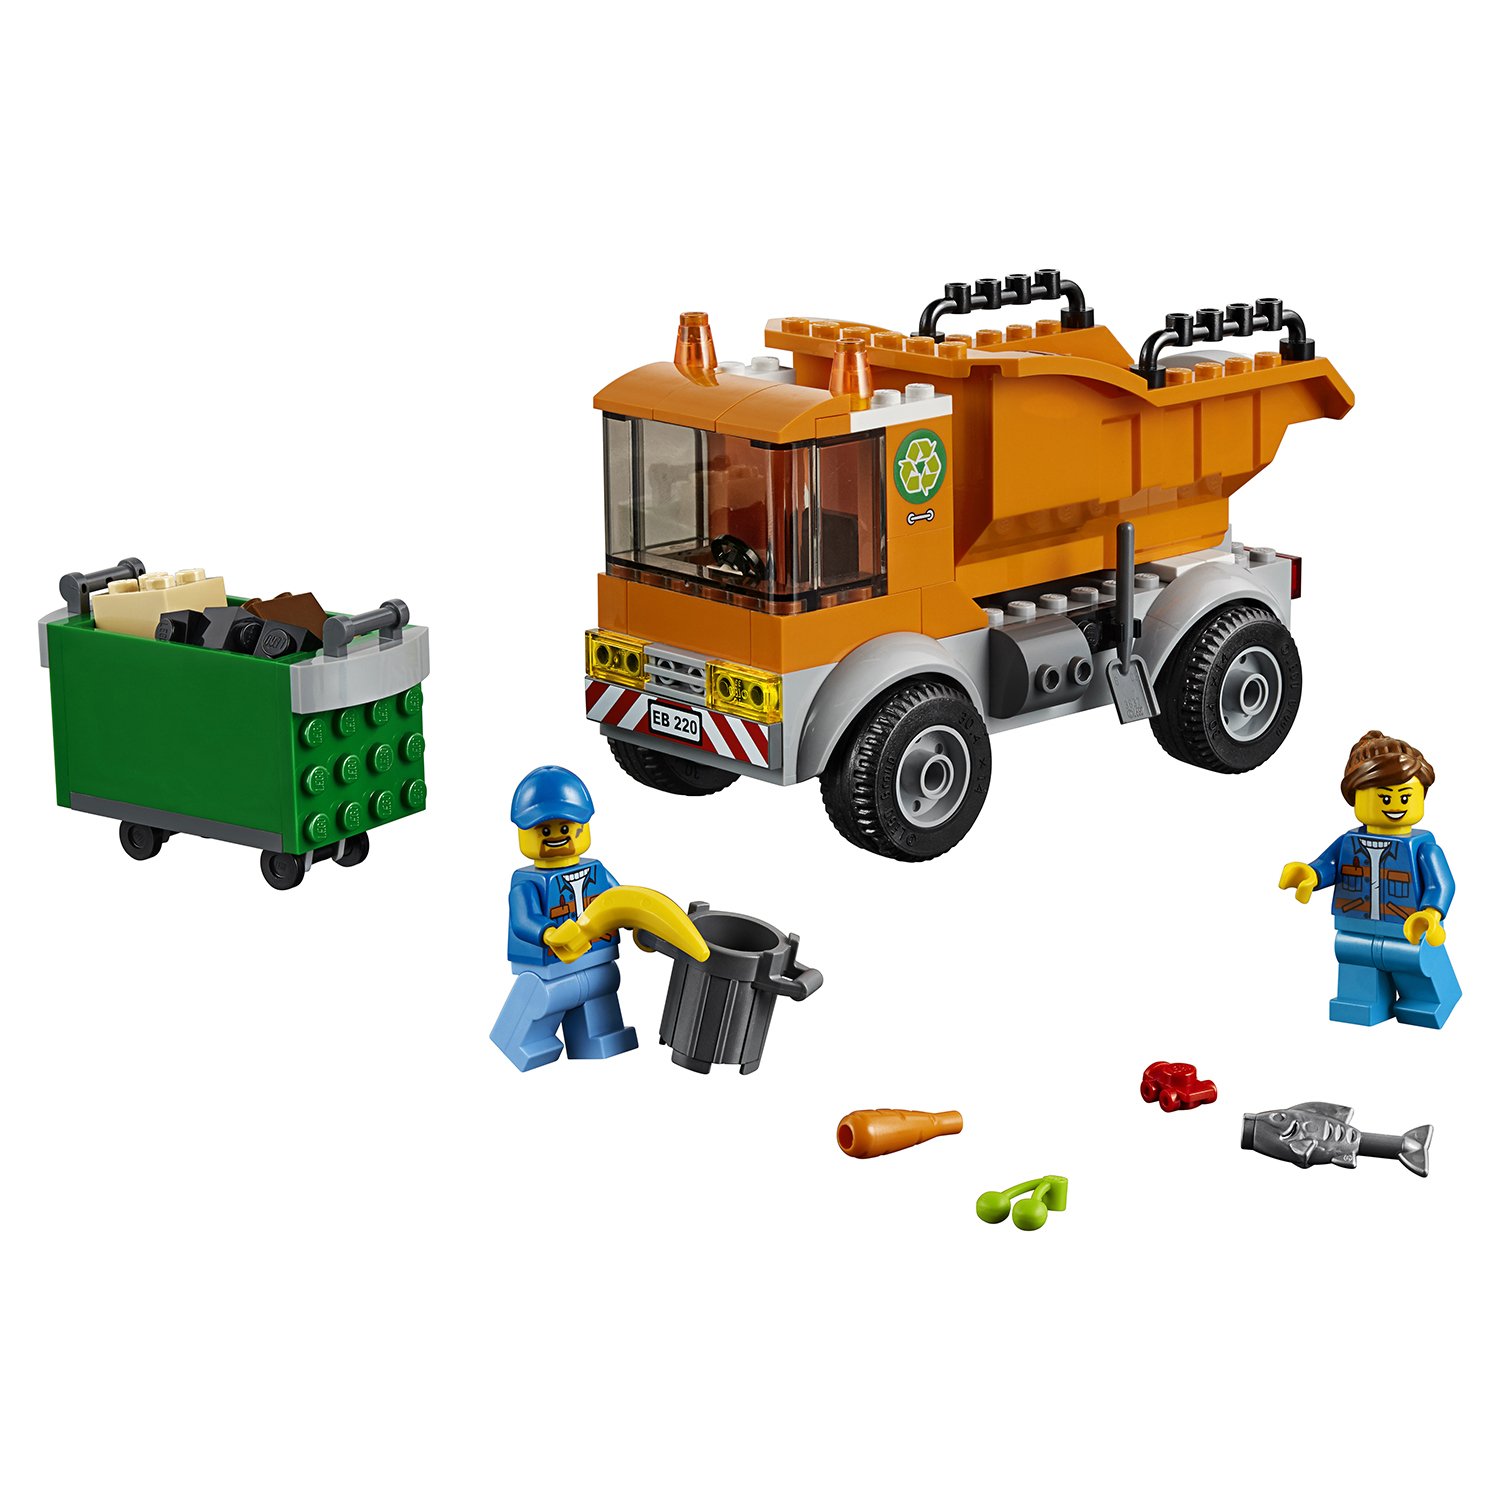 Lego City 60220 Мусоровоз